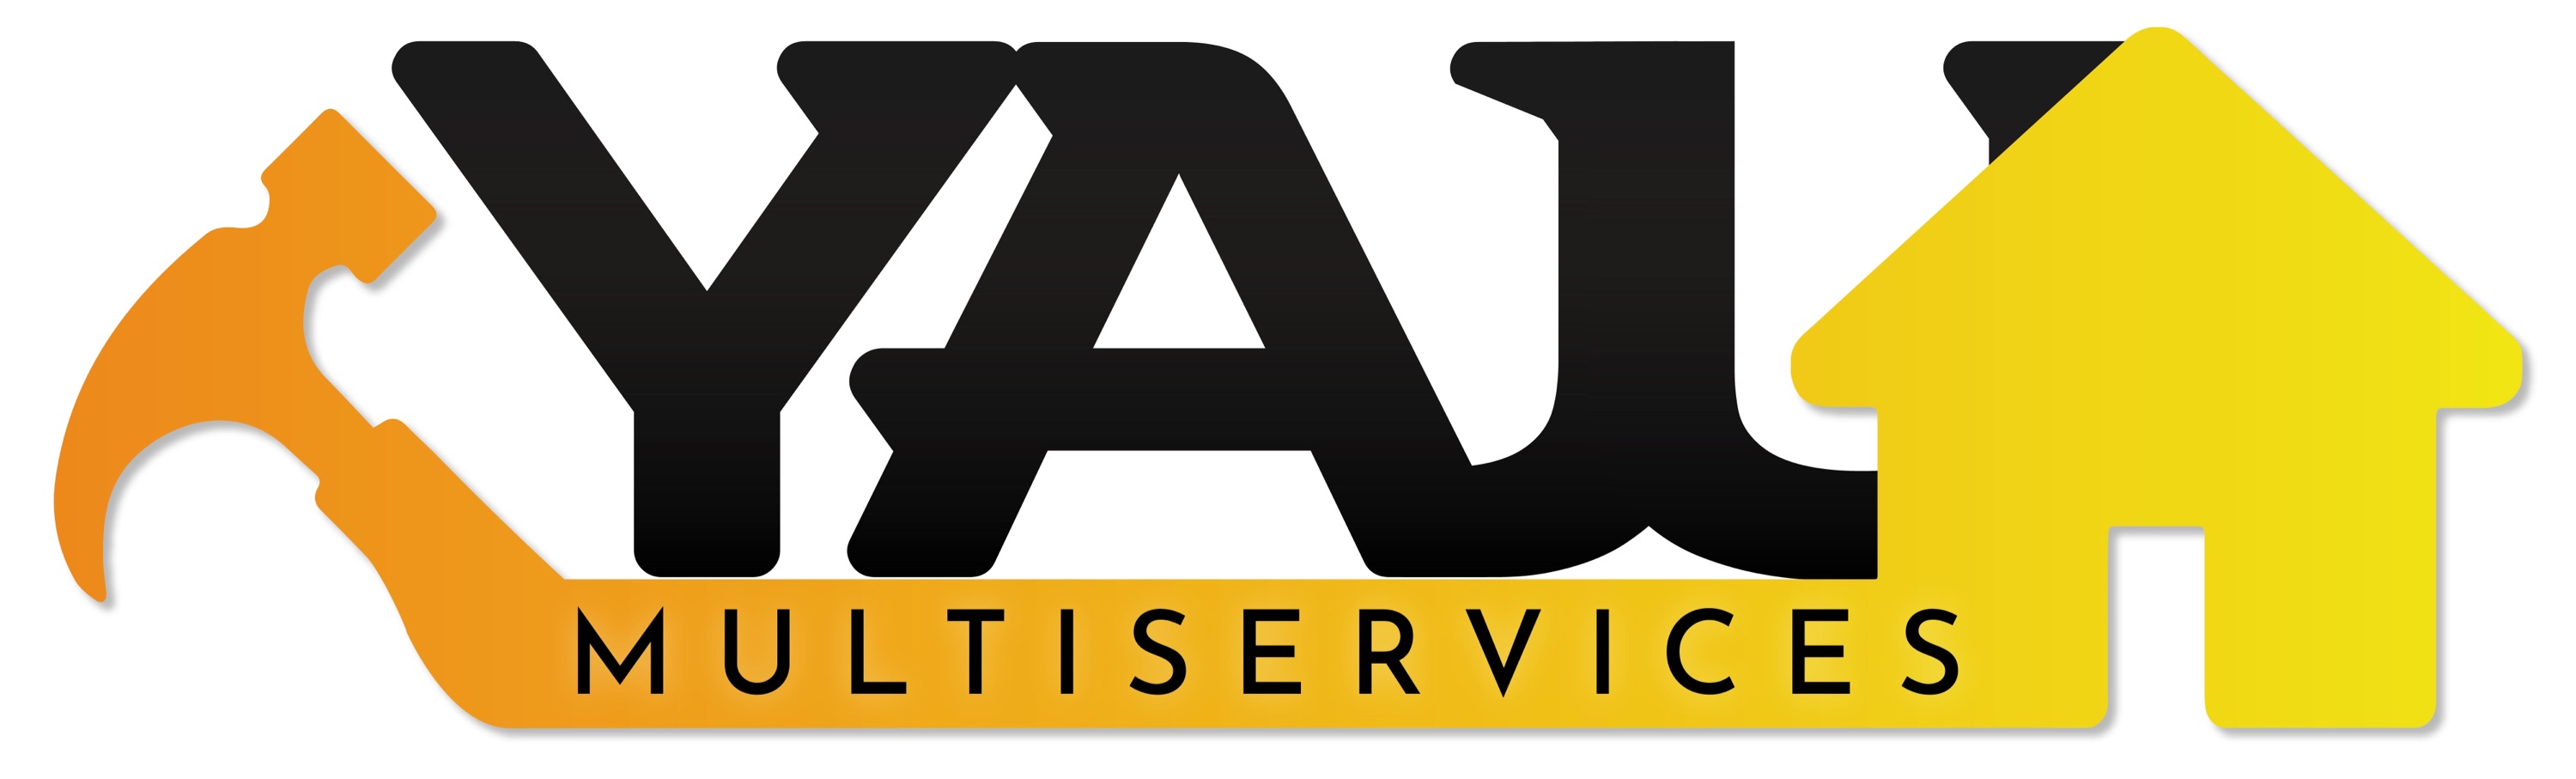 YAJU Multiservices Logo